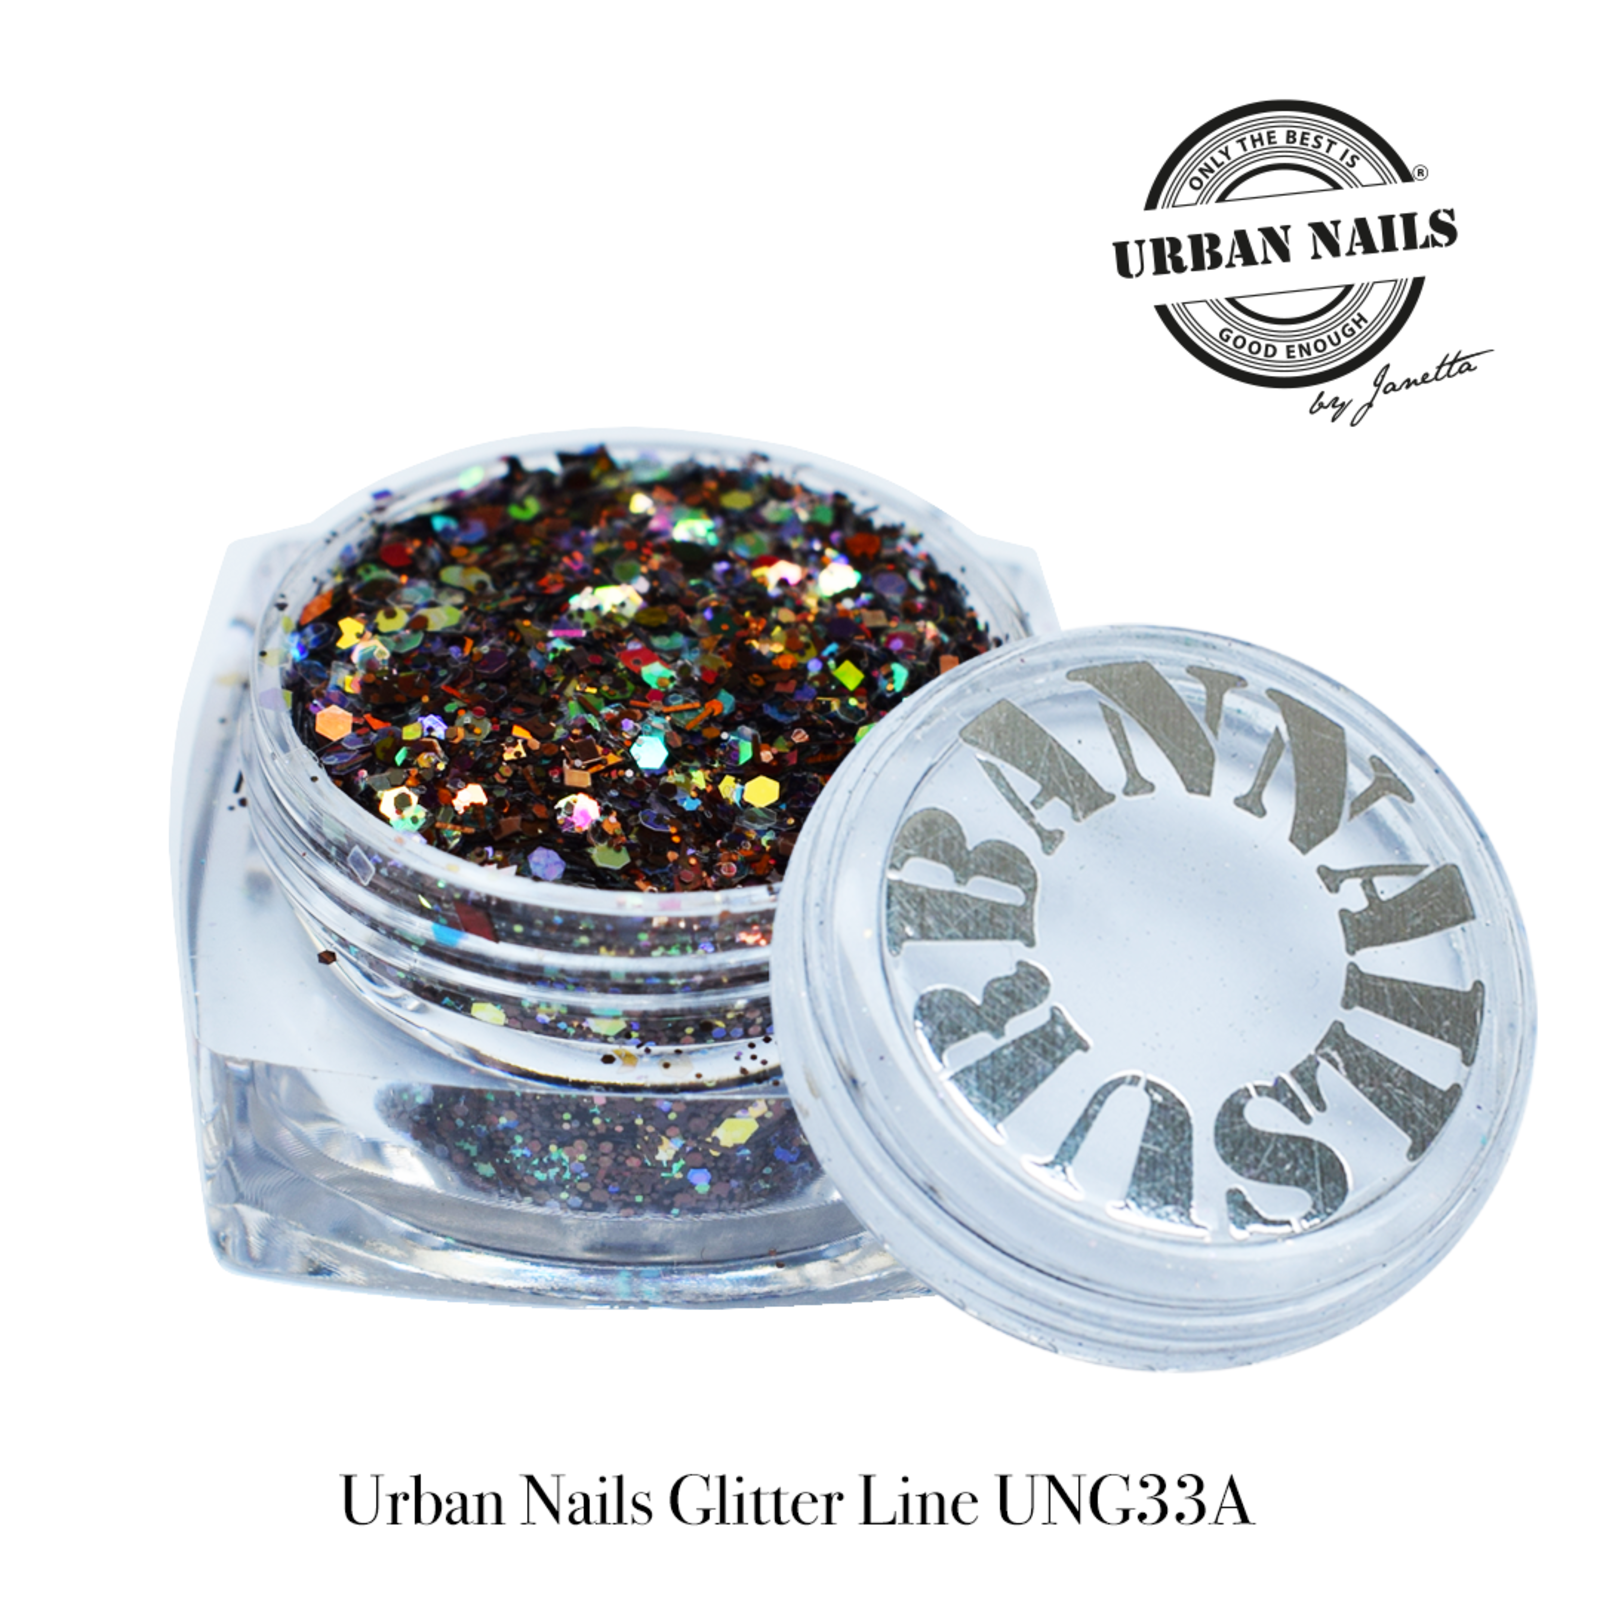 Urban nails Glitter Line UNG33-A